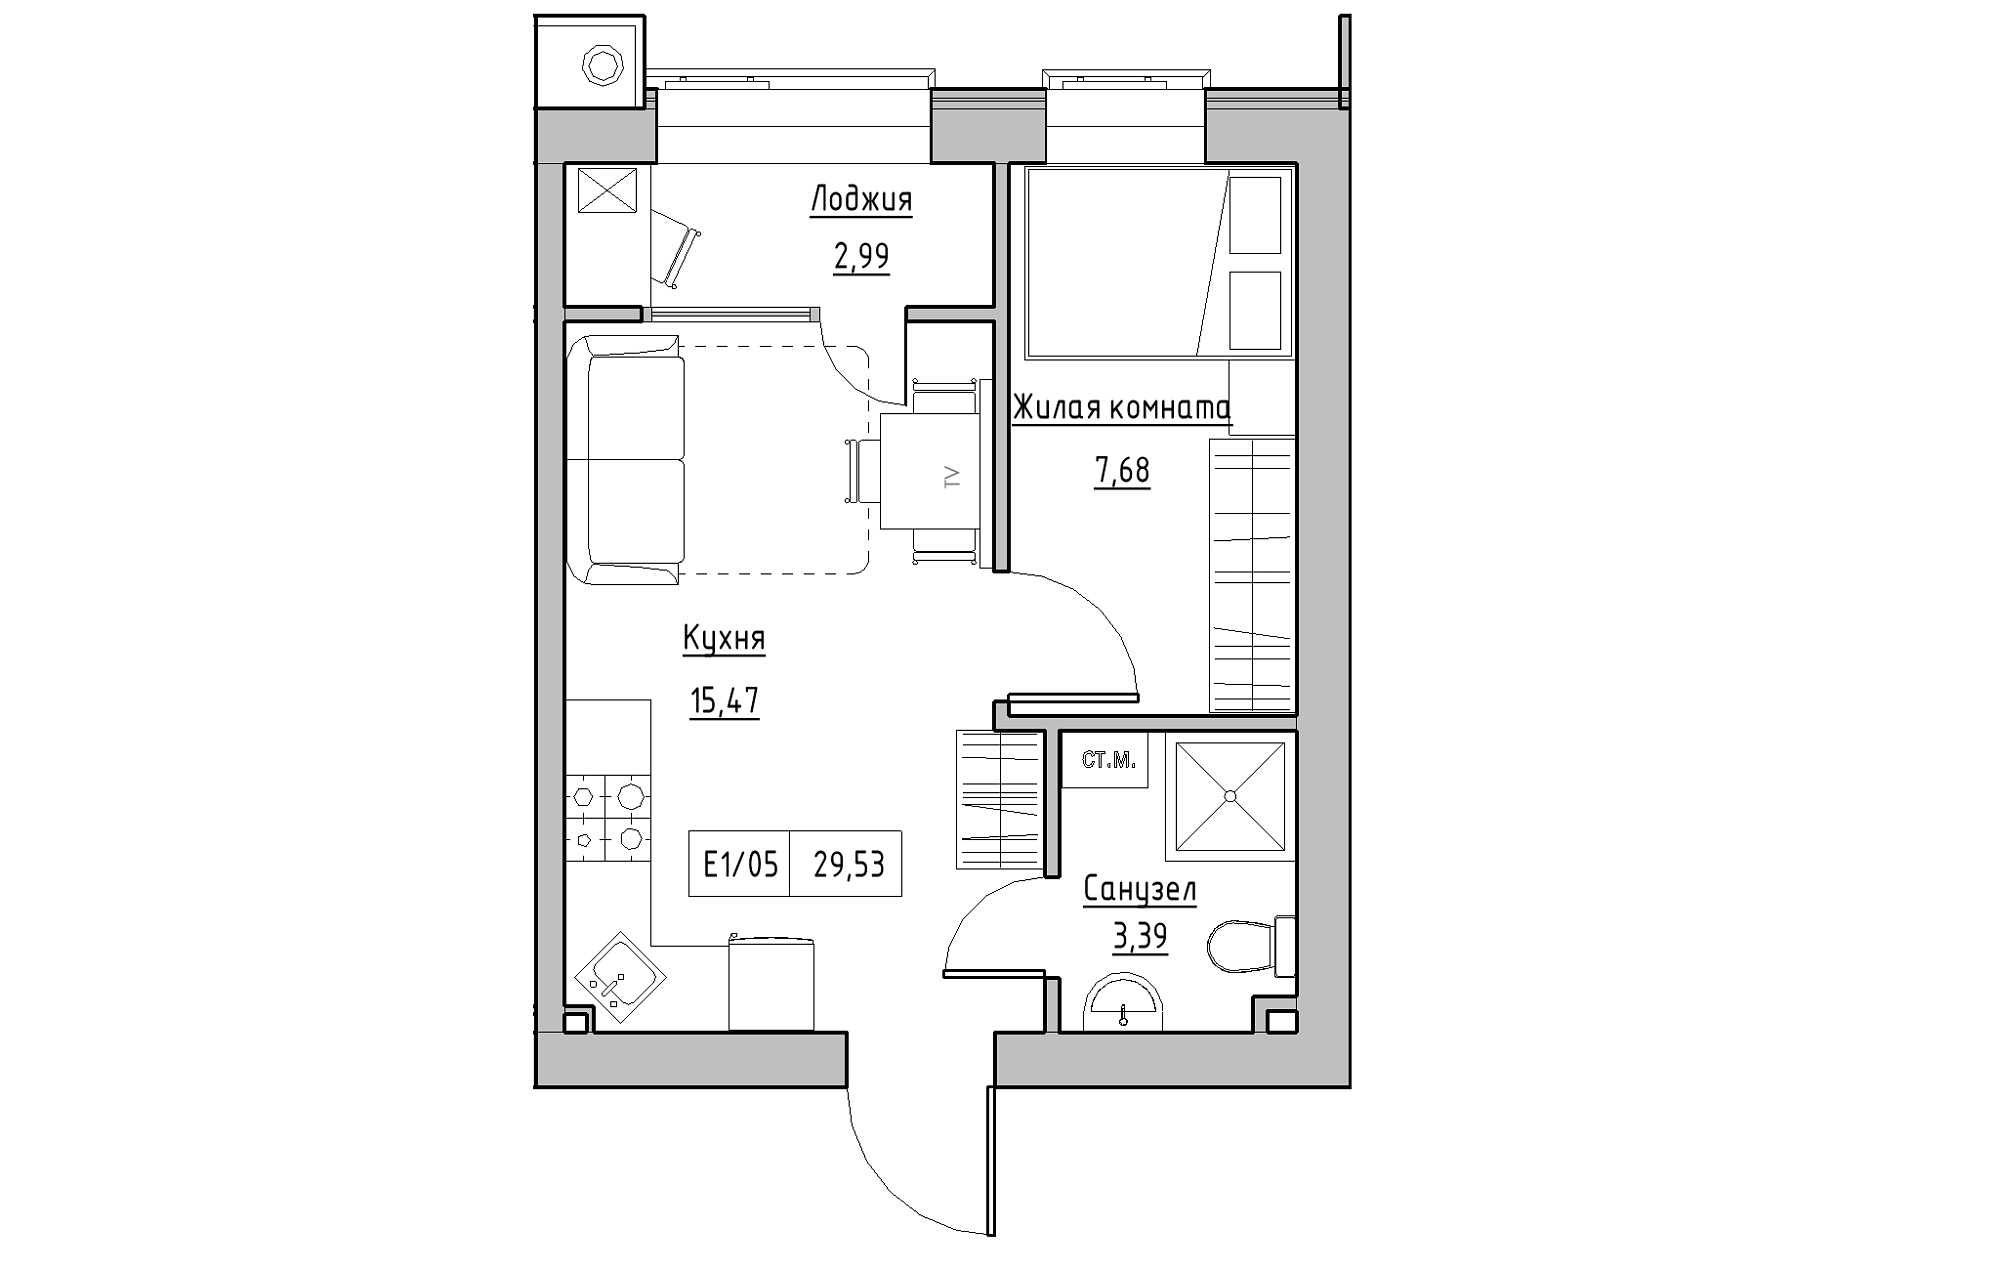 Planning 1-rm flats area 29.53m2, KS-013-02/0008.